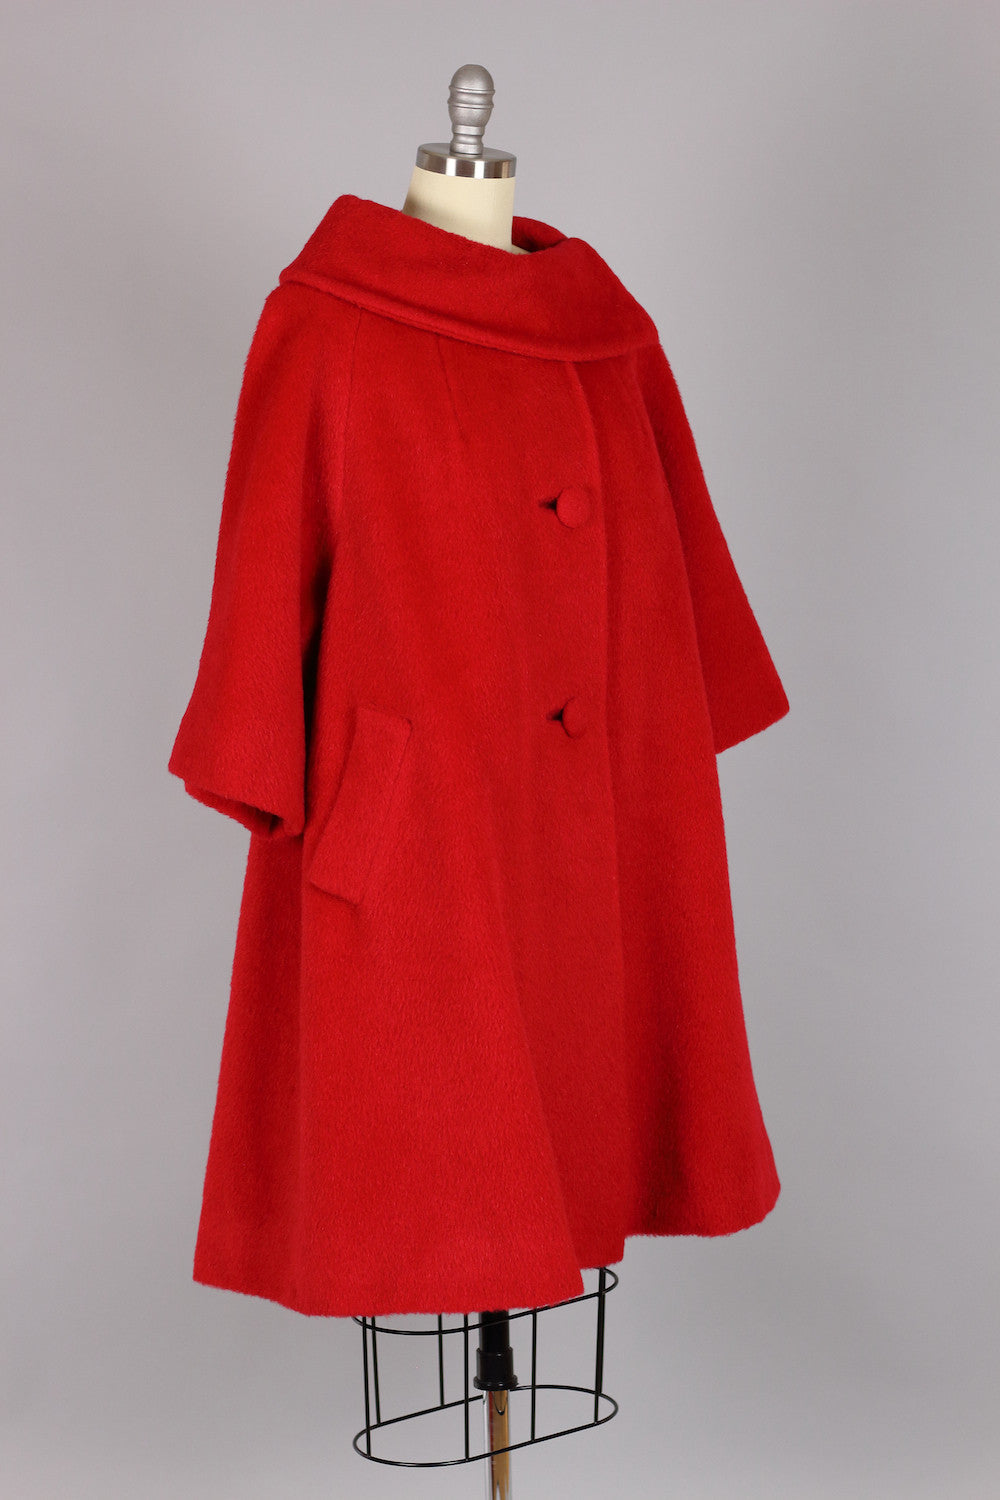 Lipstick Red 'Tisse a Paris' for Lilli Ann Vintage 1960s Swing Coat